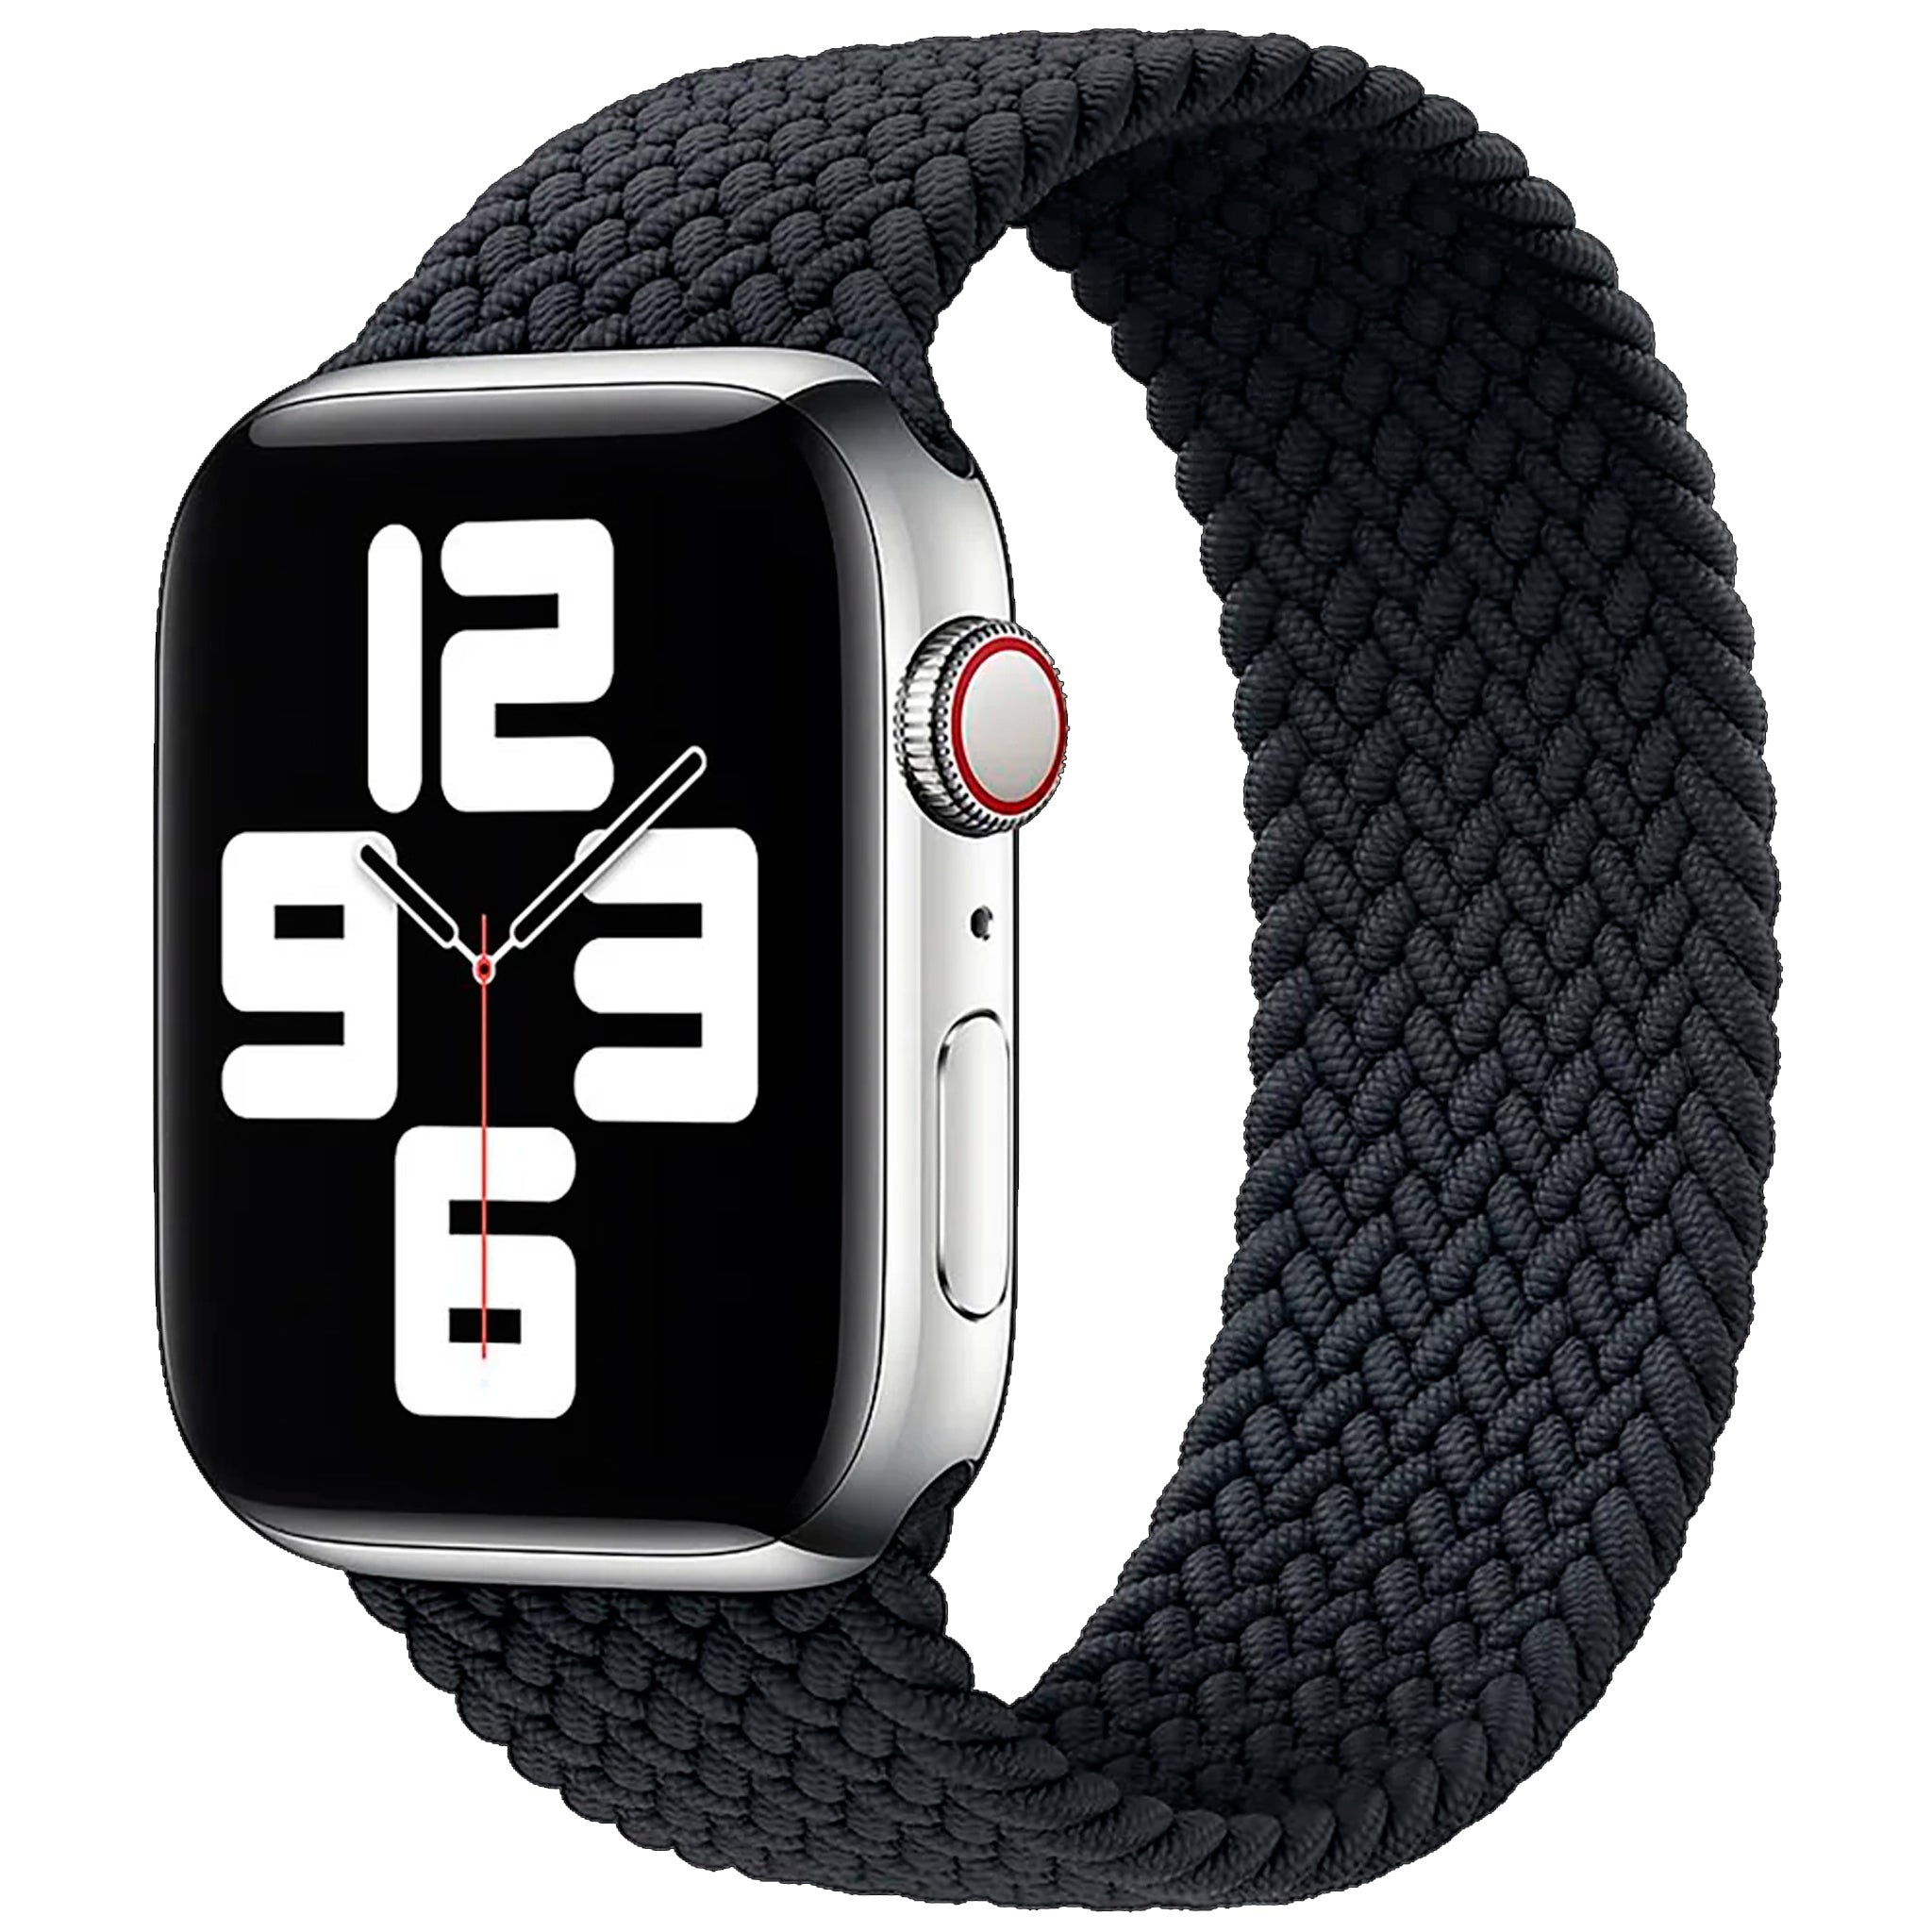 Itskins - Nylon Watch Band For Apple Watch 40mm - Black